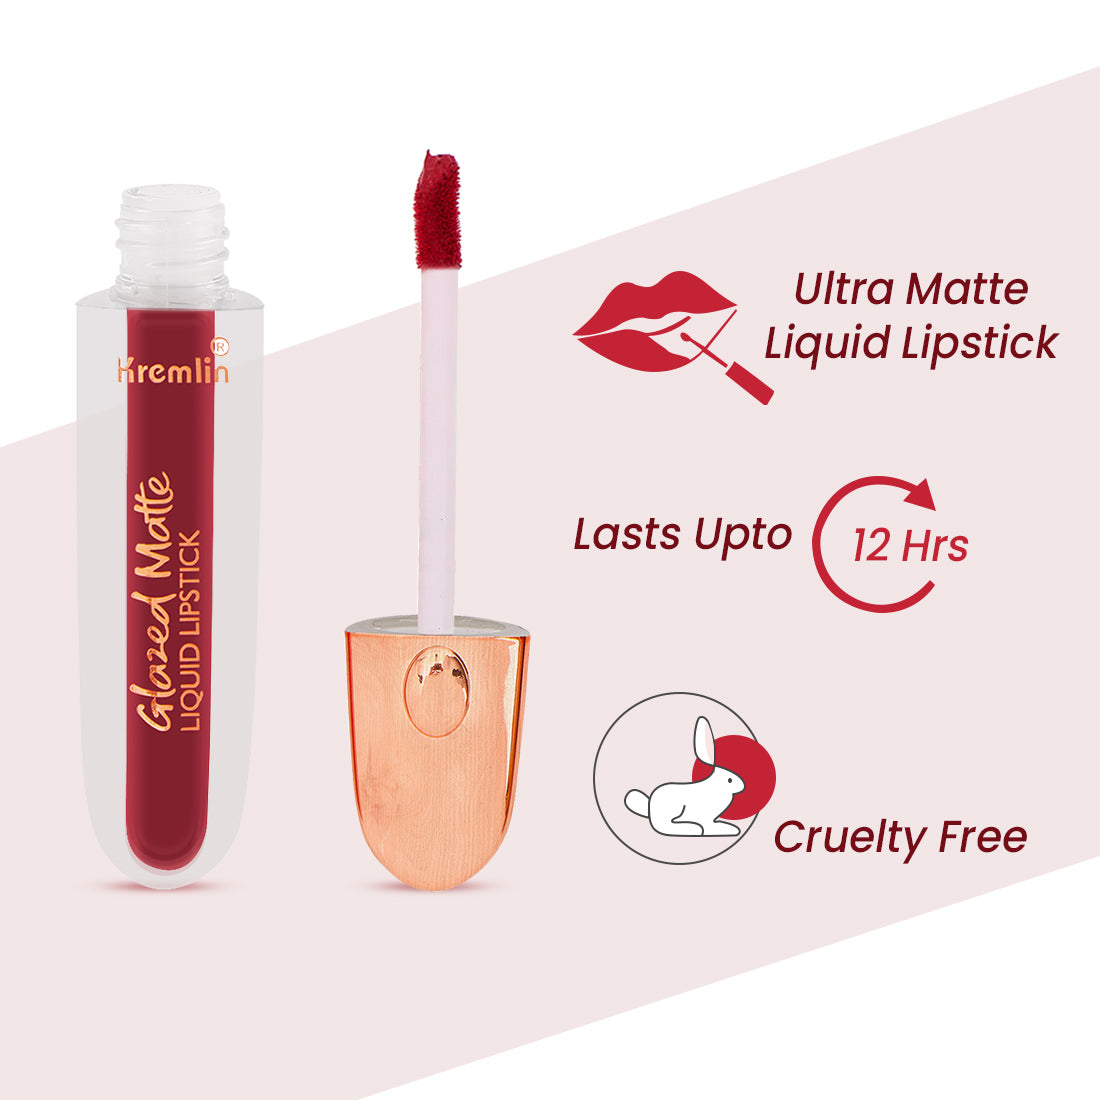 Kremlin Glazed Matte Liquid Lipstick Lips Pack of 2 (Barbie, Fiery Queen)